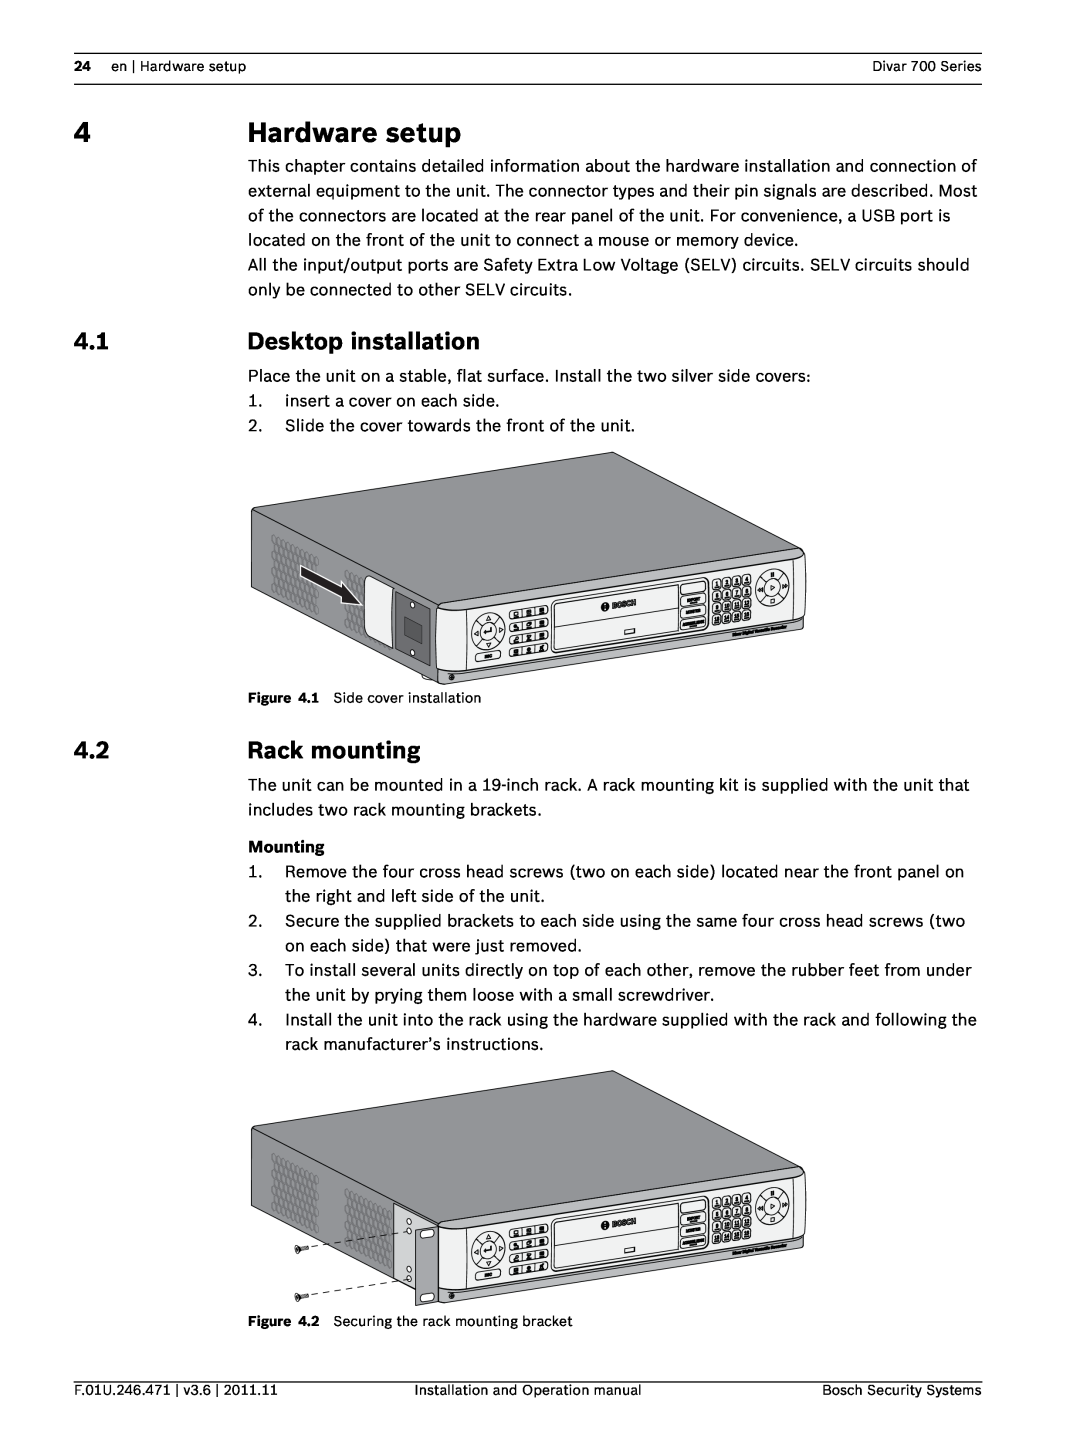 Bosch Appliances 700 operation manual Hardware setup, Desktop installation, Rack mounting, Mounting 